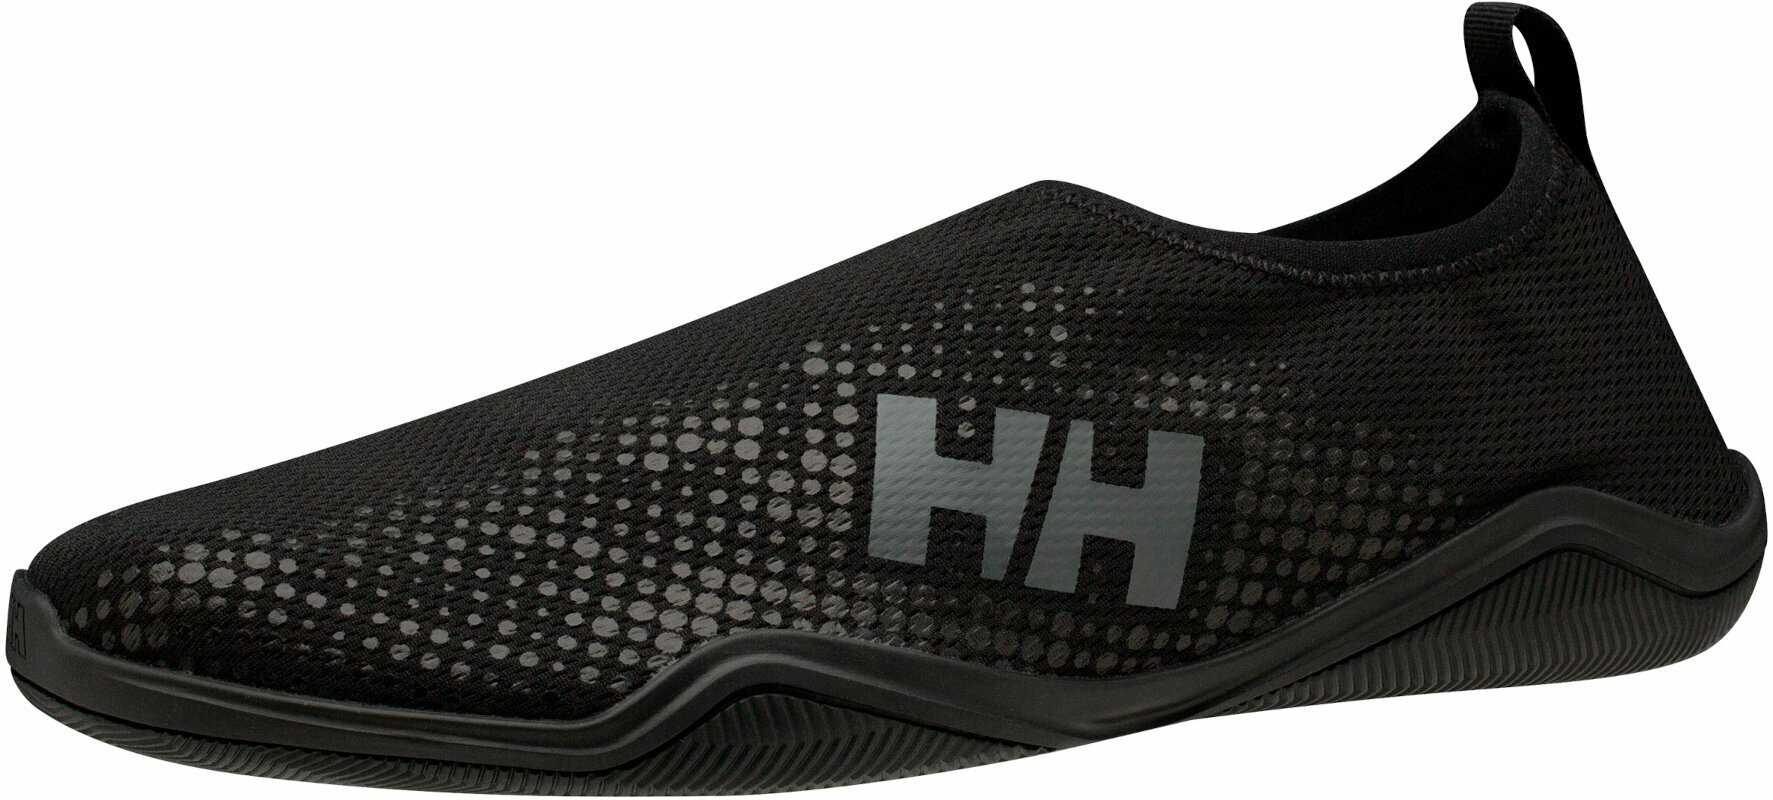 Scarpe uomo Helly Hansen Men's Crest Watermoc Black/Charcoal 45